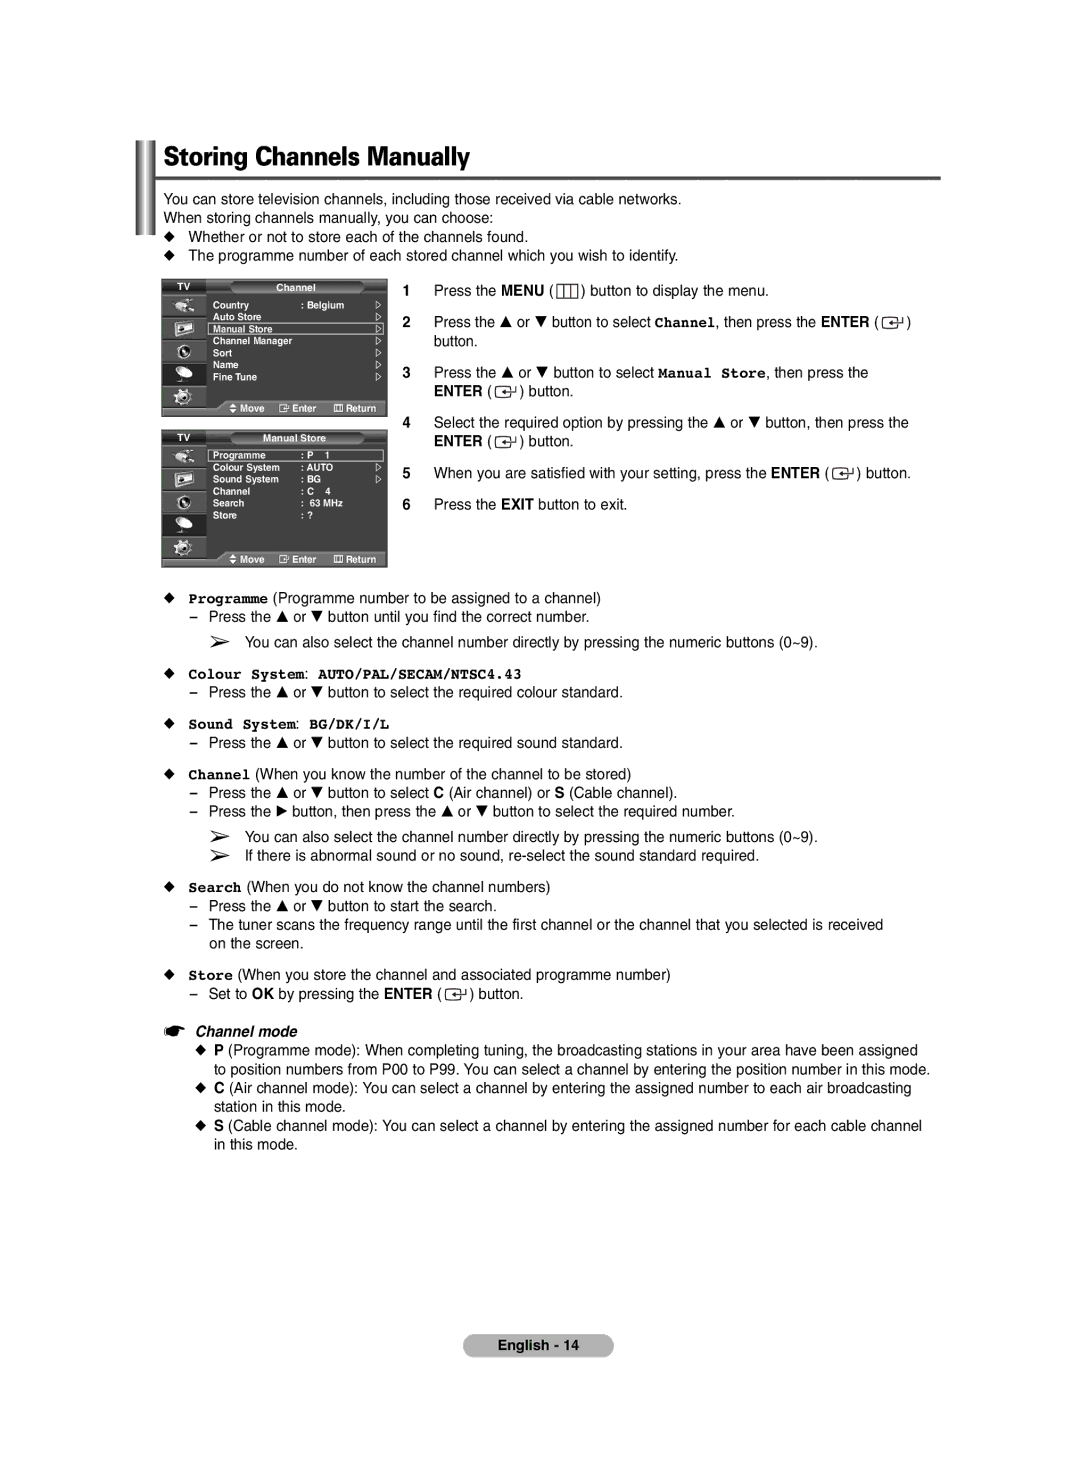 Samsung BN68-00990V-03 manual Storing Channels Manually, Colour System AUTO/PAL/SECAM/NTSC4.43, Sound System BG/DK/I/L 